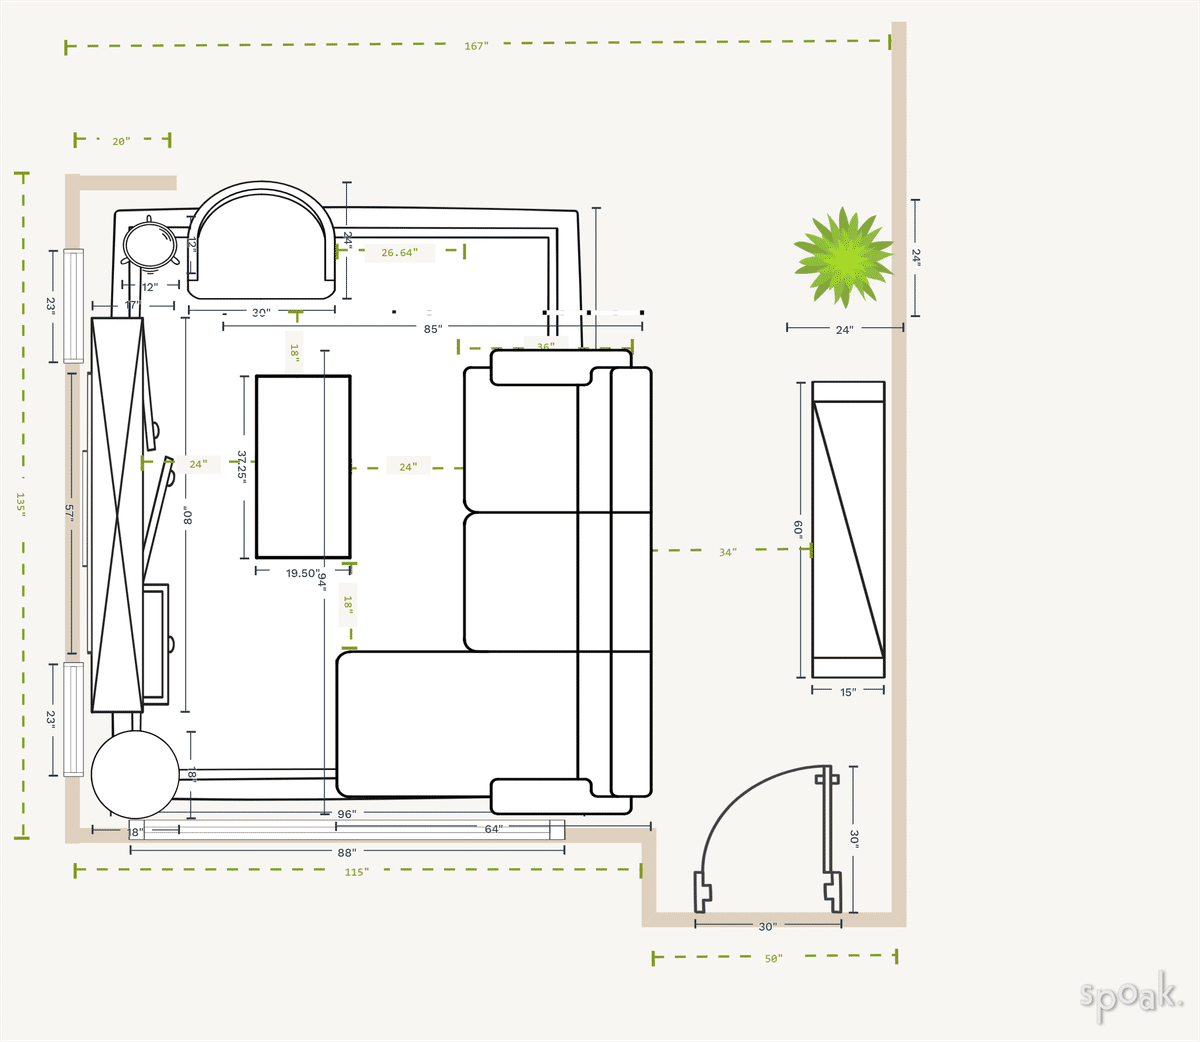 Living Room Plan designed by sarah cerda